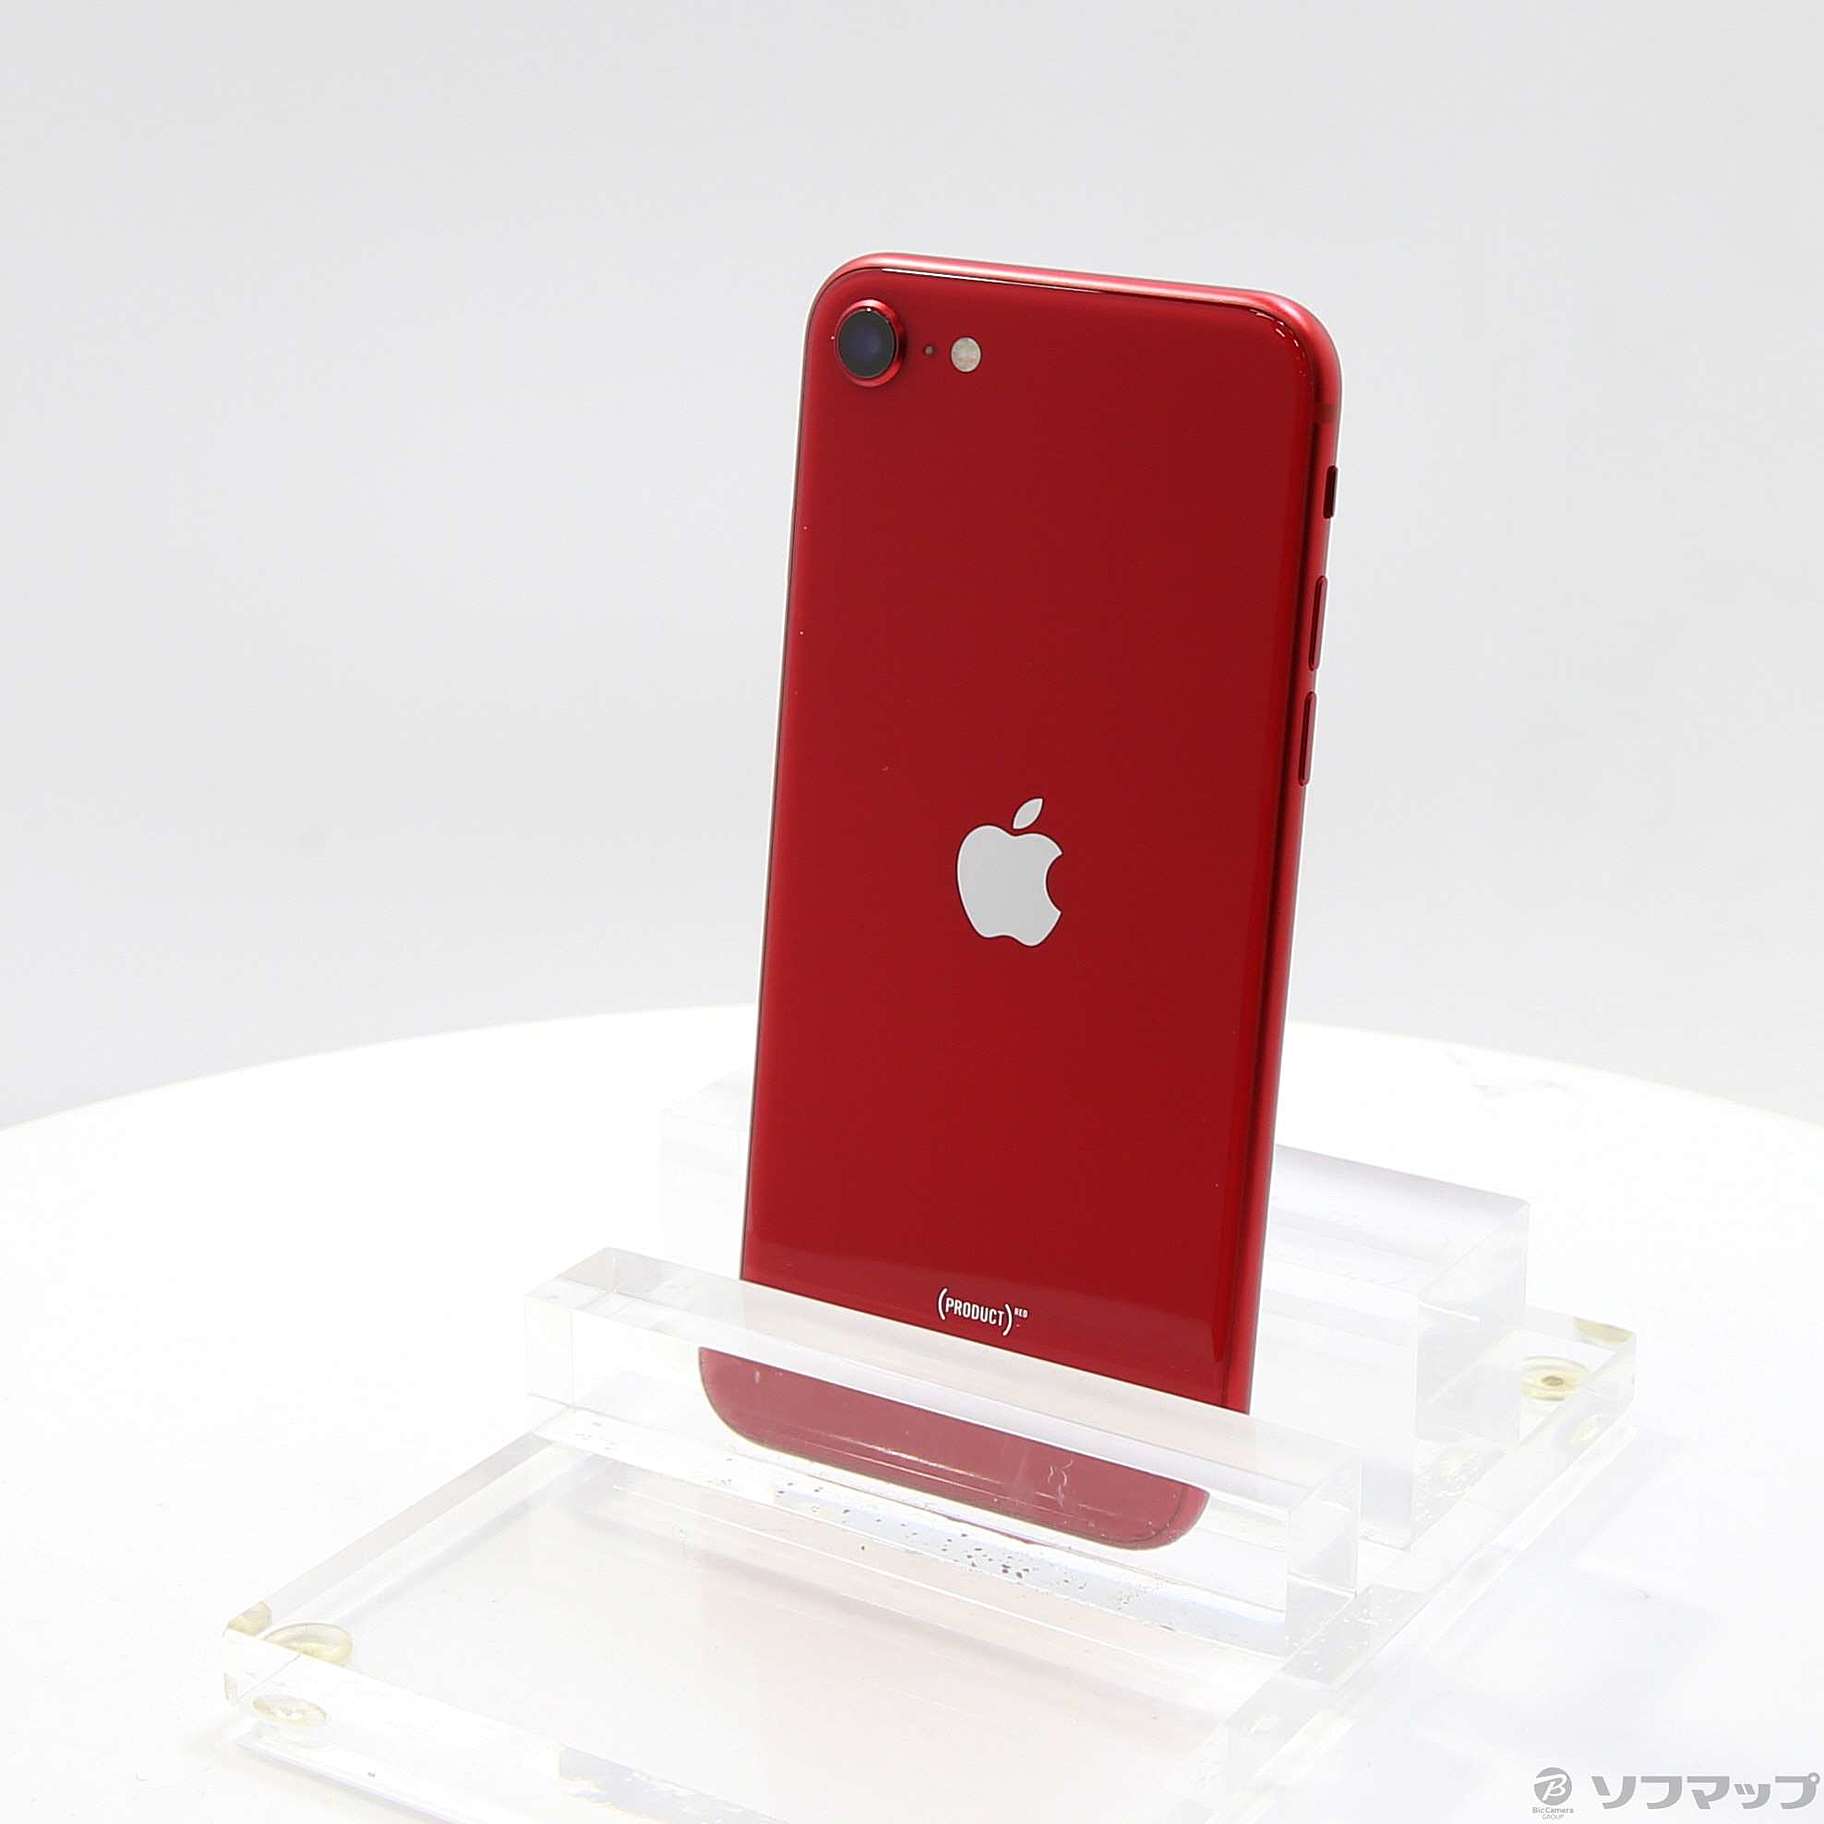 iPhone SE (第2世代) (PRODUCT)RED 64GB SIMフリー [レッド